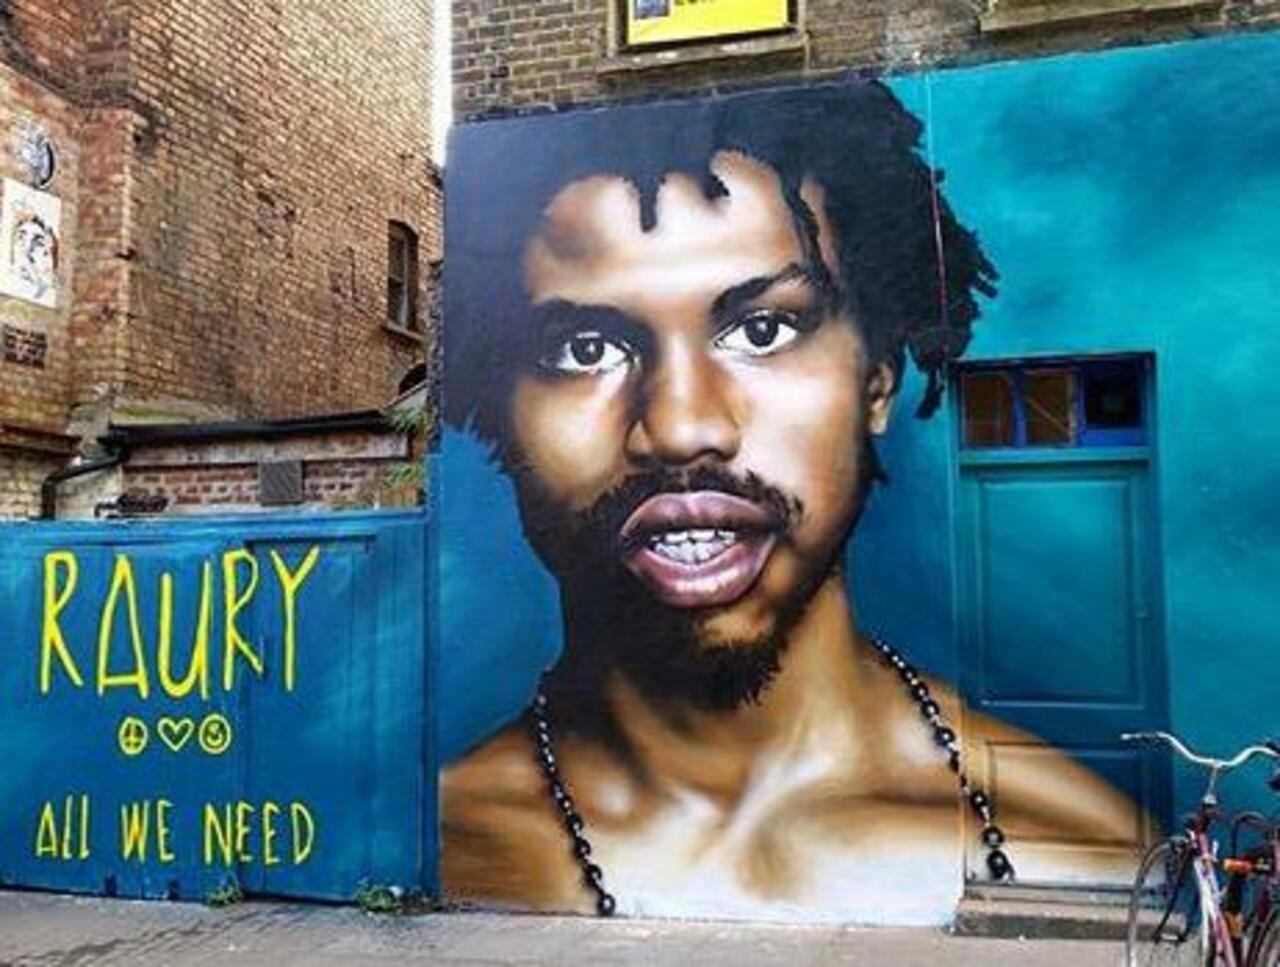 RT @GoogleStreetArt: New Street Art of @Raury by Olliver Switch in Brick Lane 

#art #graffiti #mural #streetart http://t.co/nEtrgiW12h